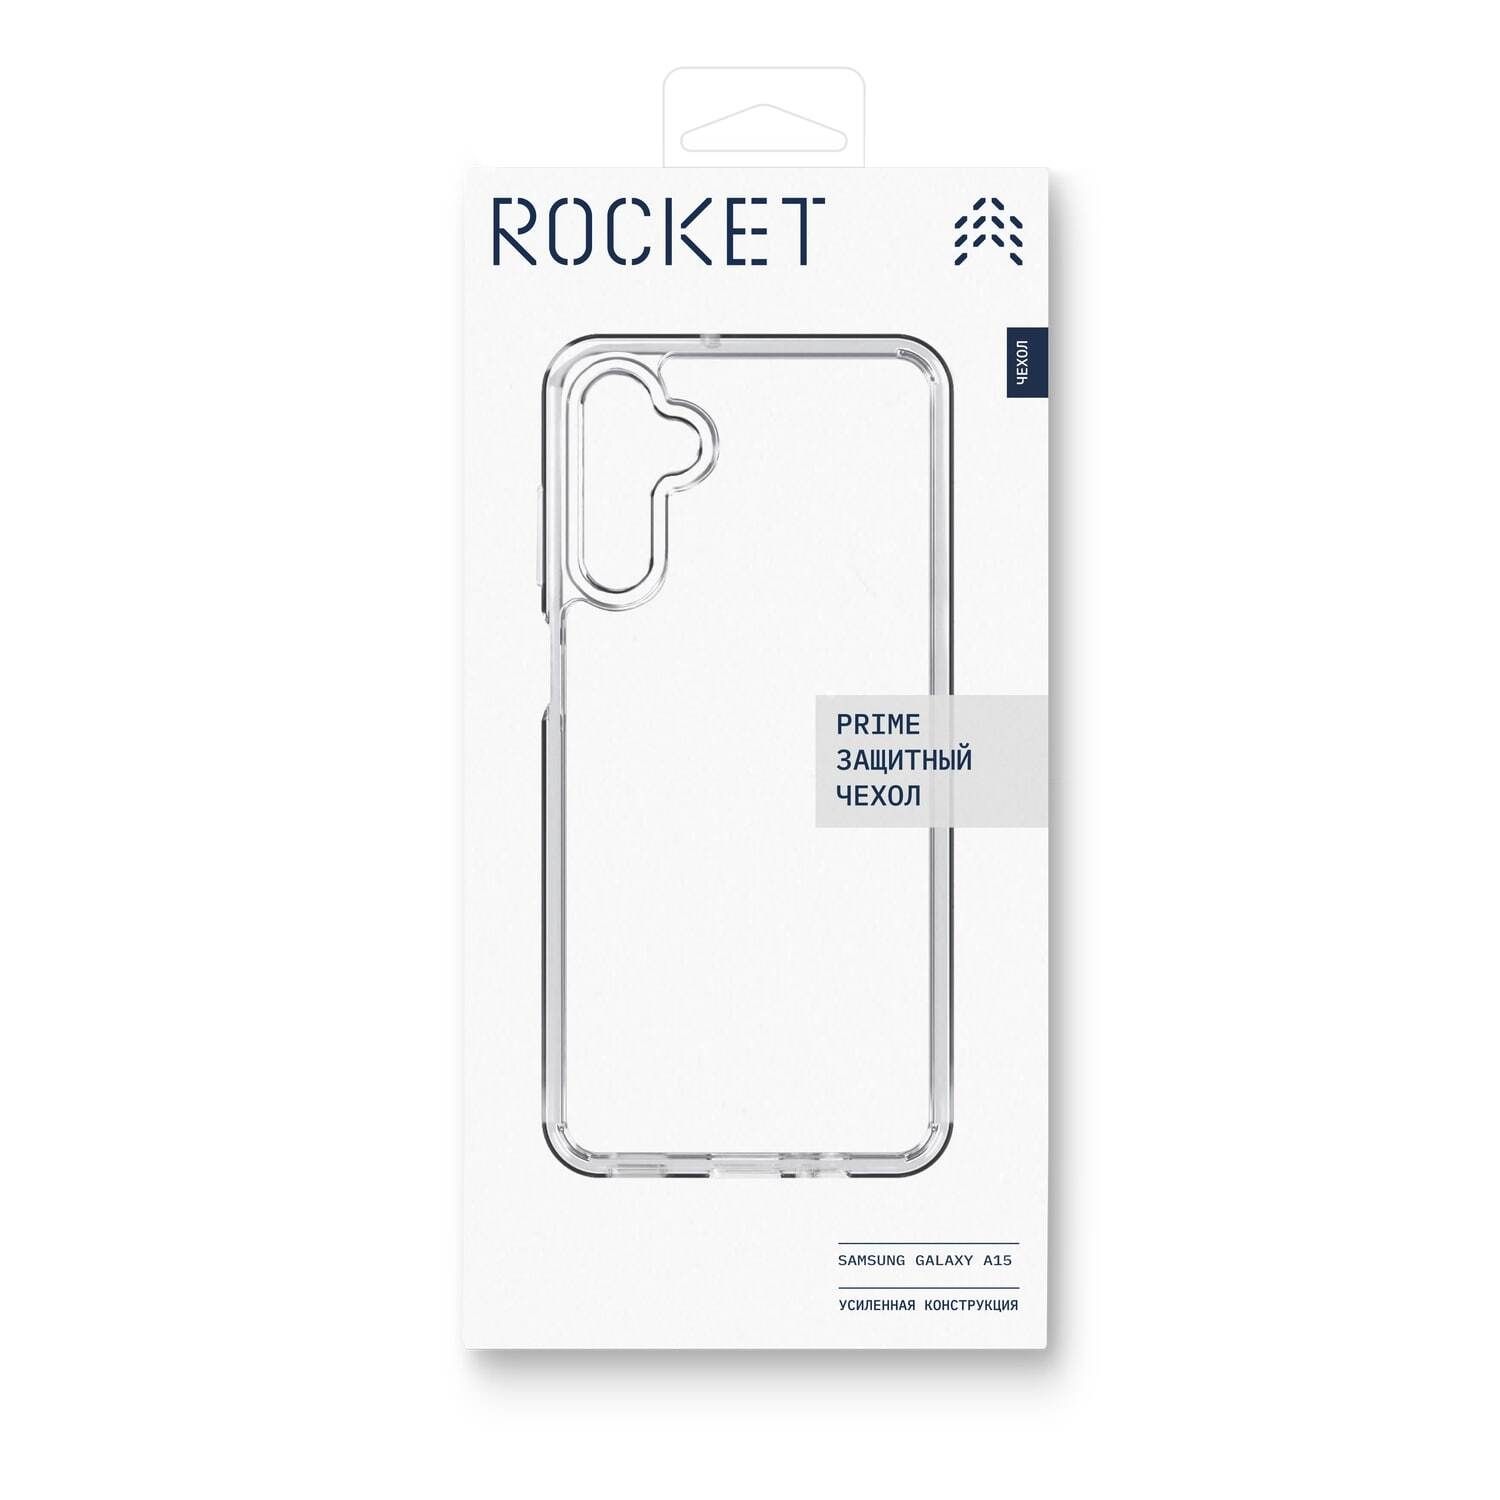 Чехол накладка Rocket Prime для Samsung Galaxy A15 прозрачный